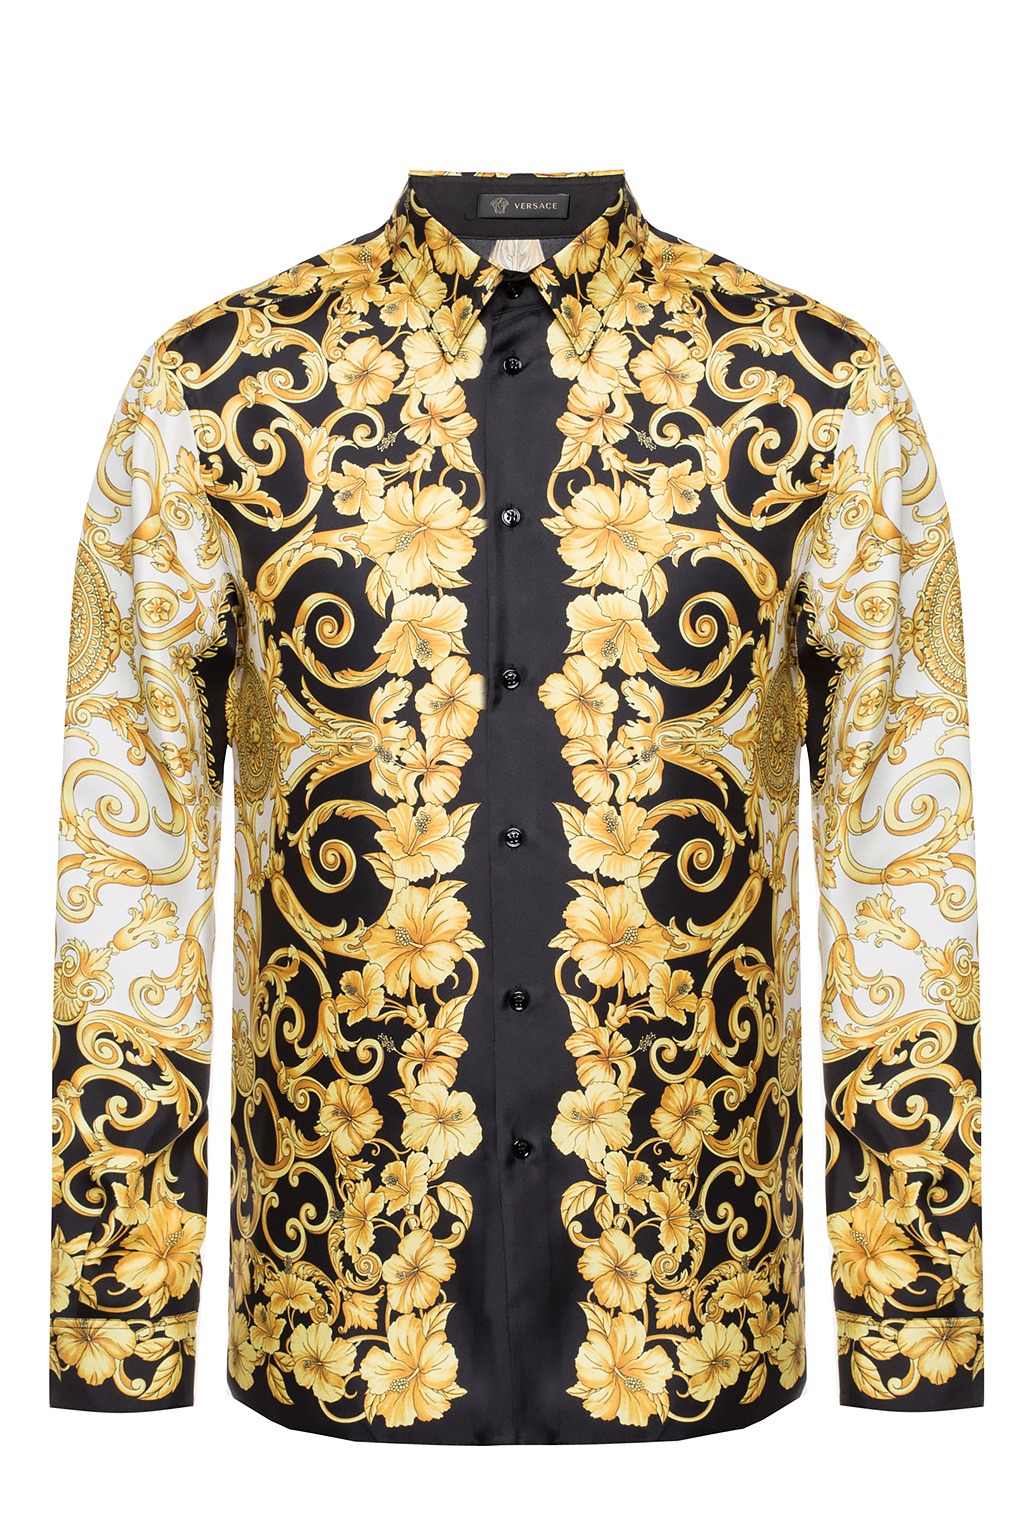 Versace Baroque motif shirt | Men's Clothing | Vitkac